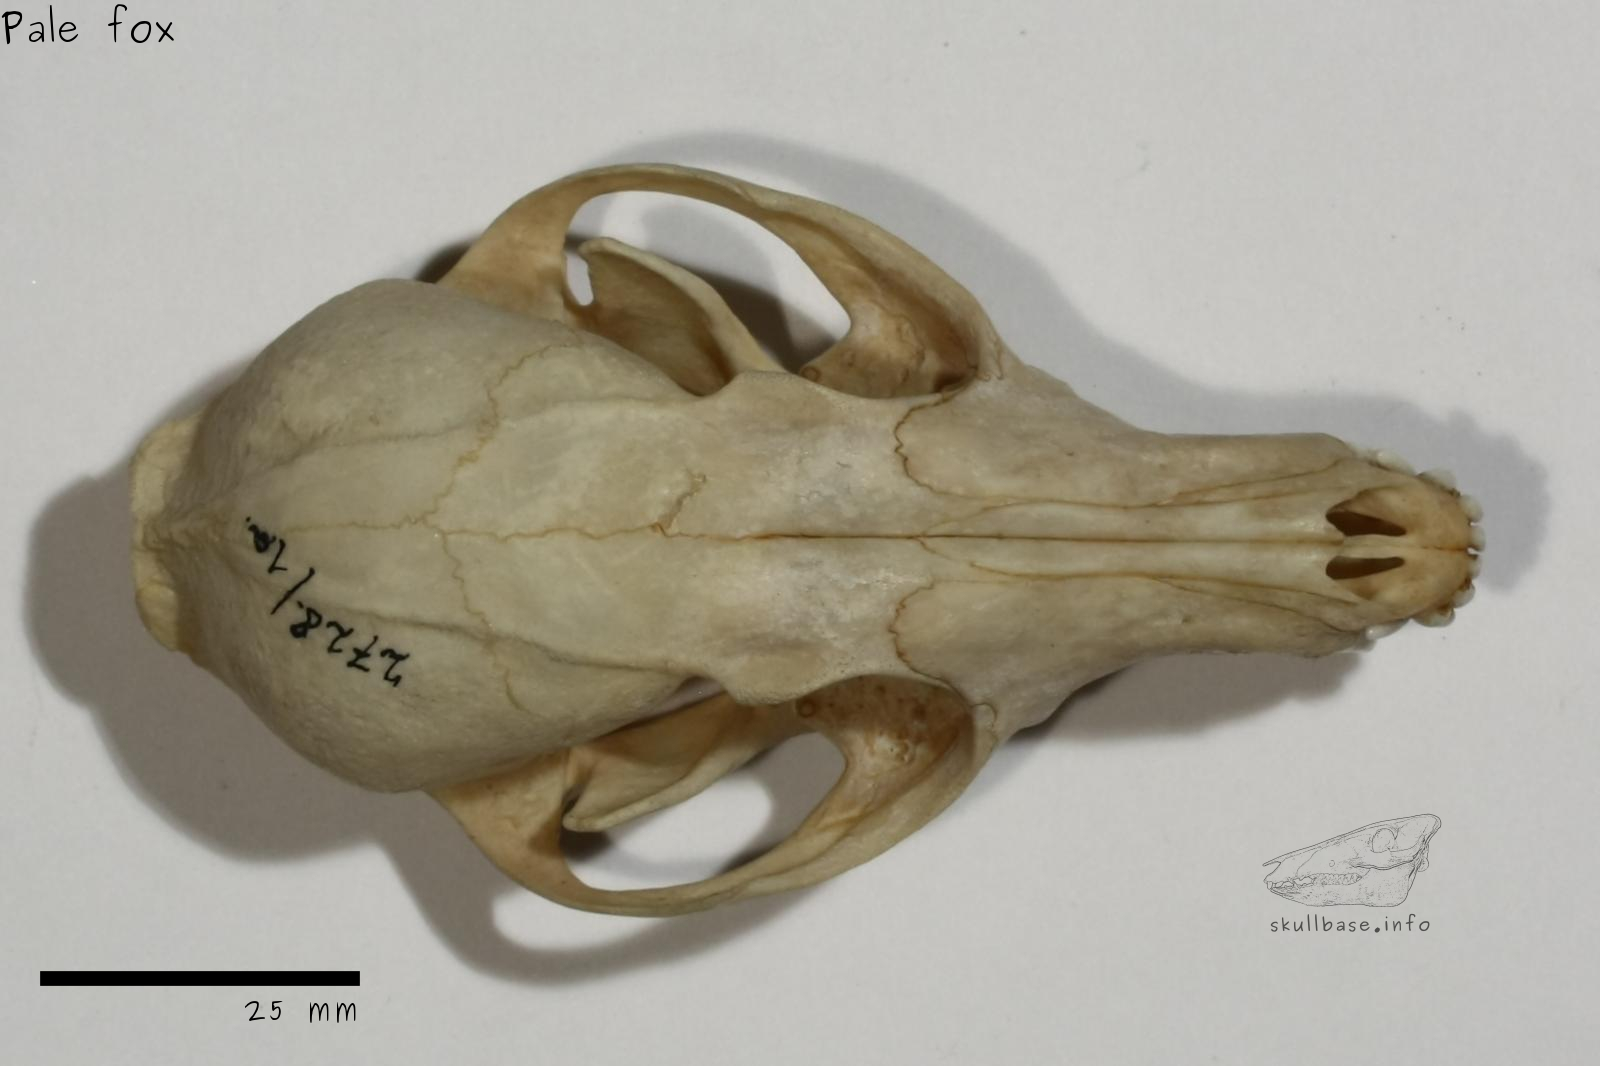 Pale fox (Vulpes pallida) skull dorsal view